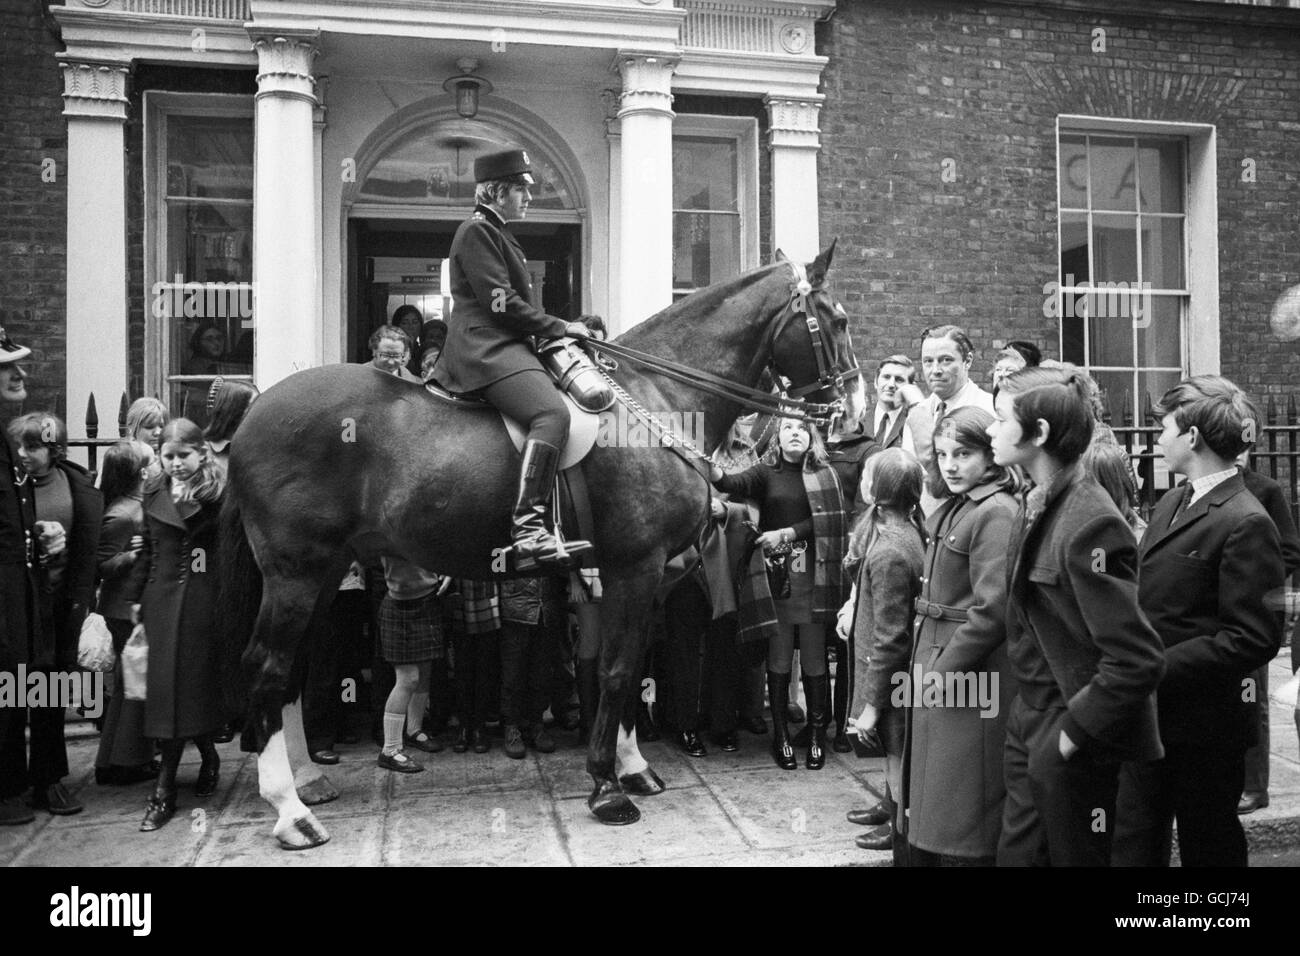 Animals - Police Horse - Royal Society of Arts, London Stock Photo